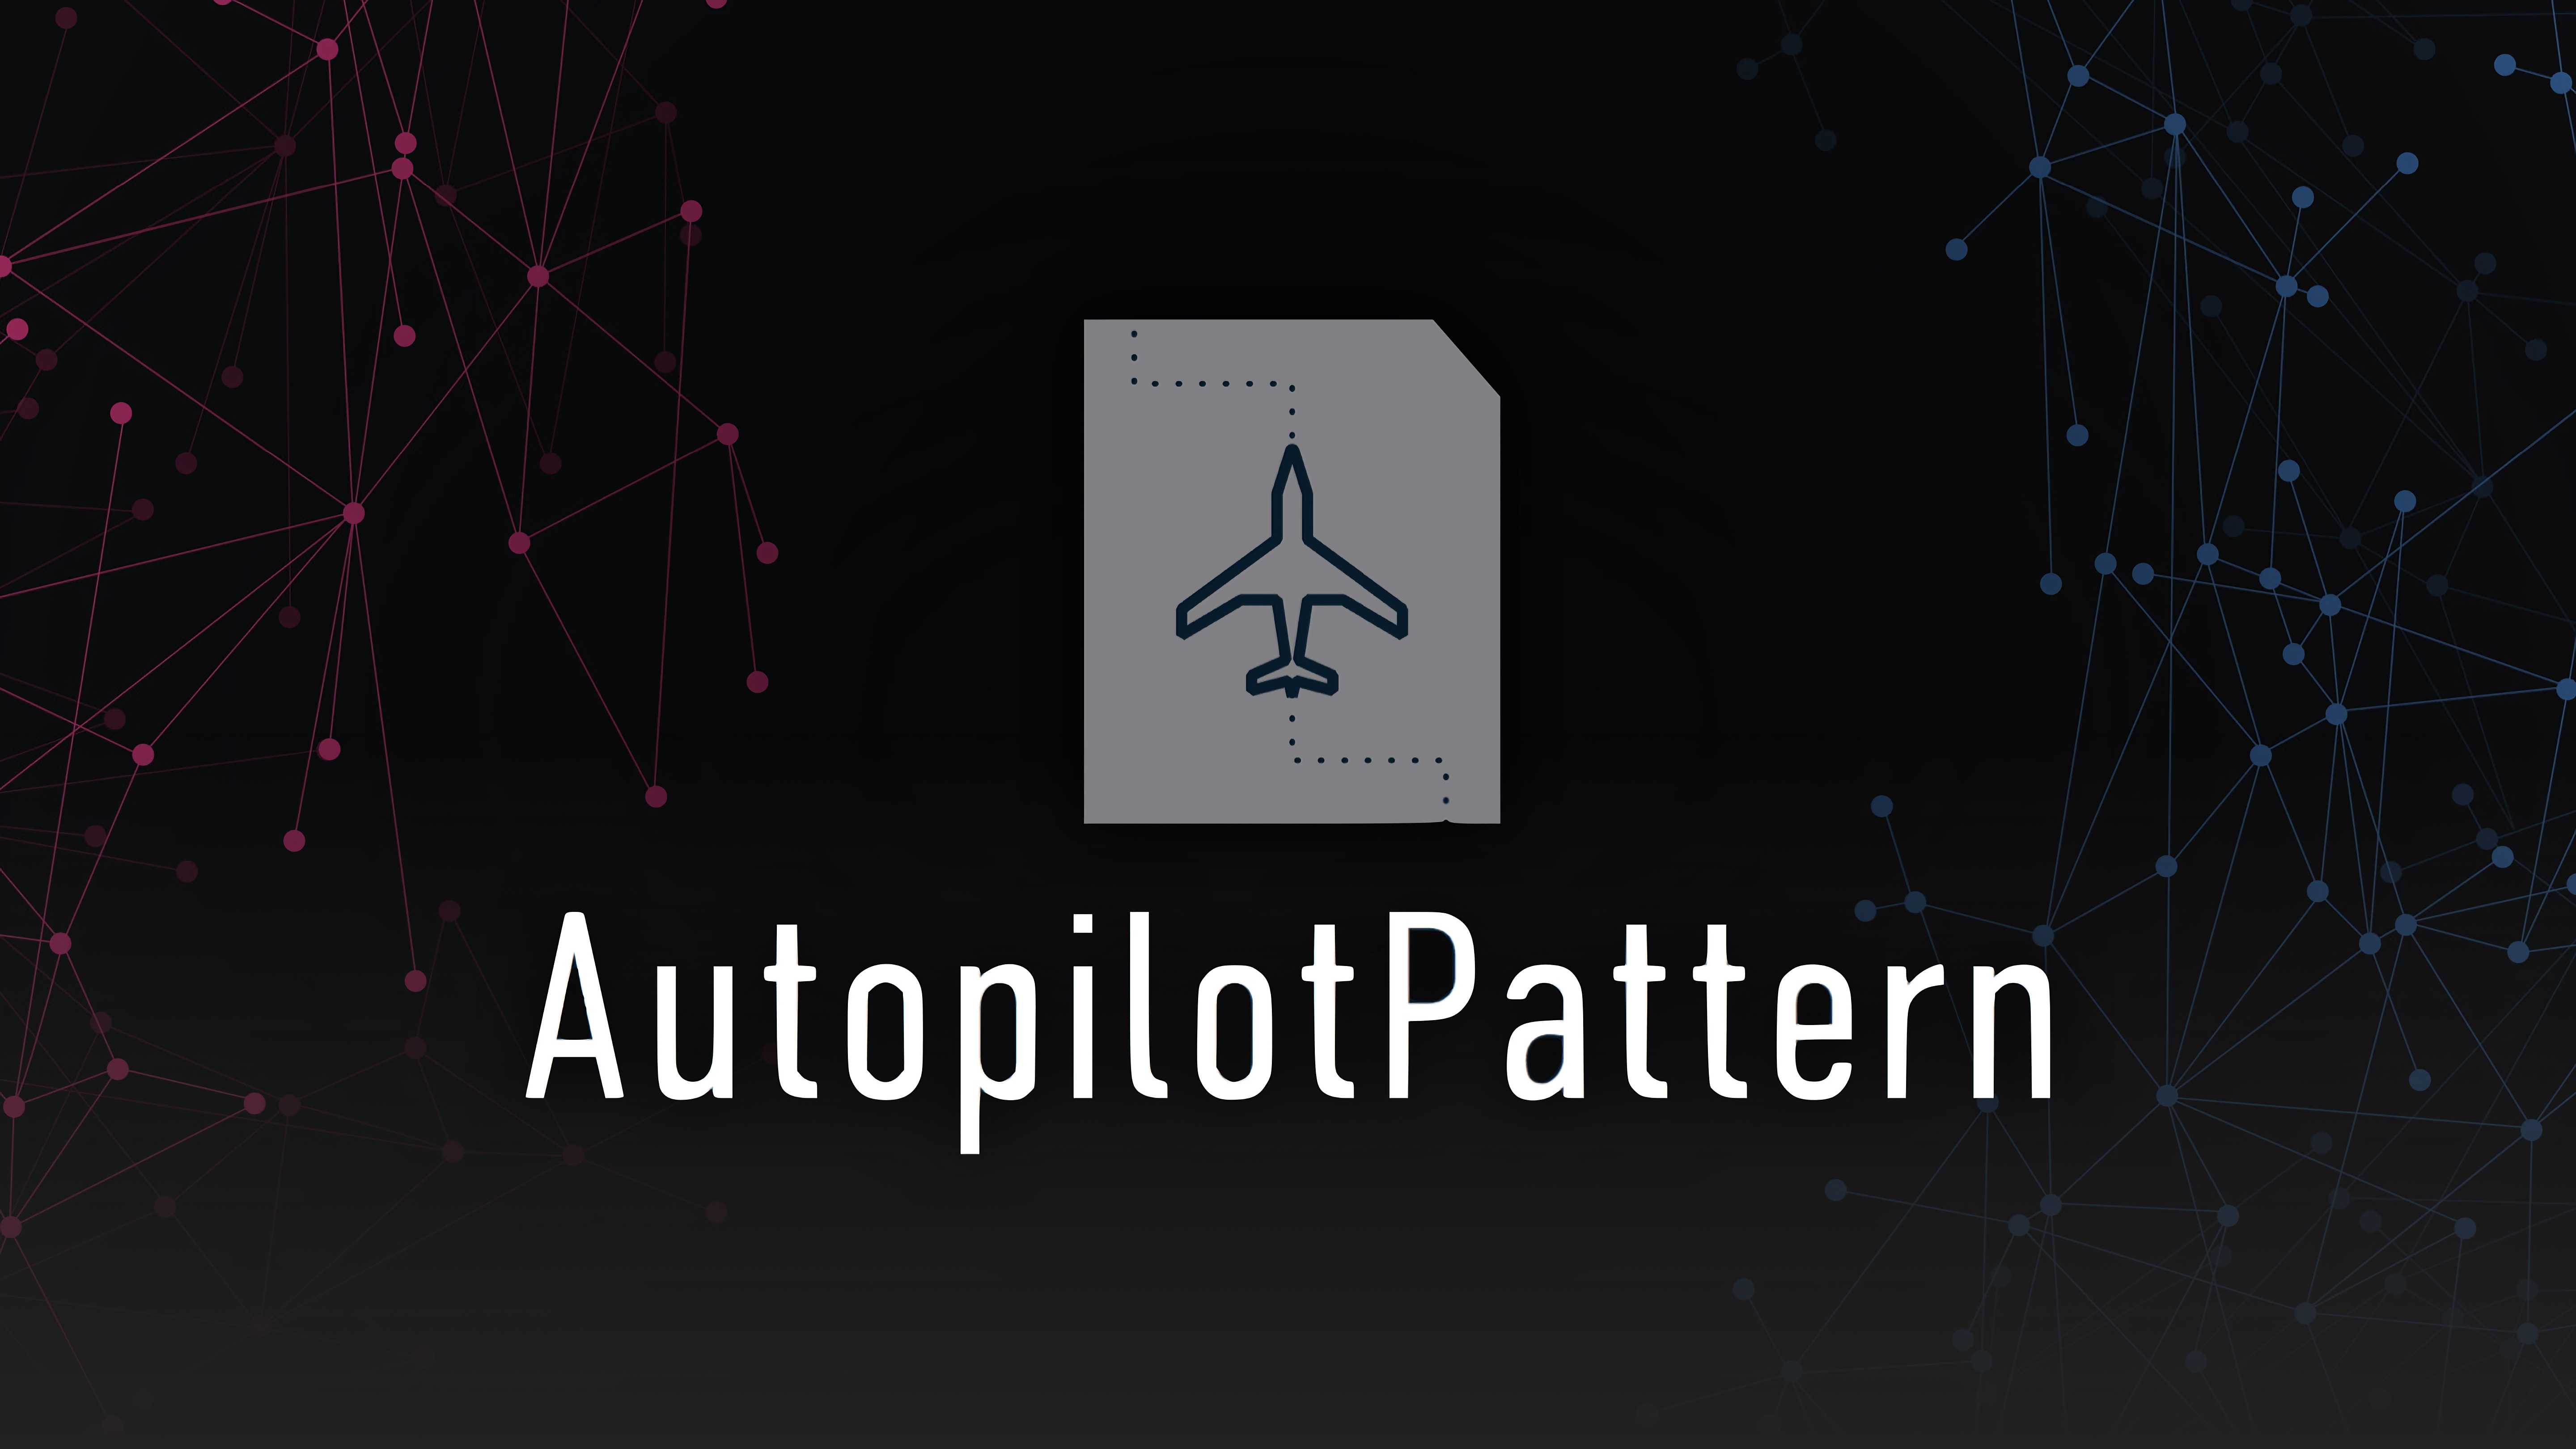 Autopilot Pattern logo with public domain background illustration.